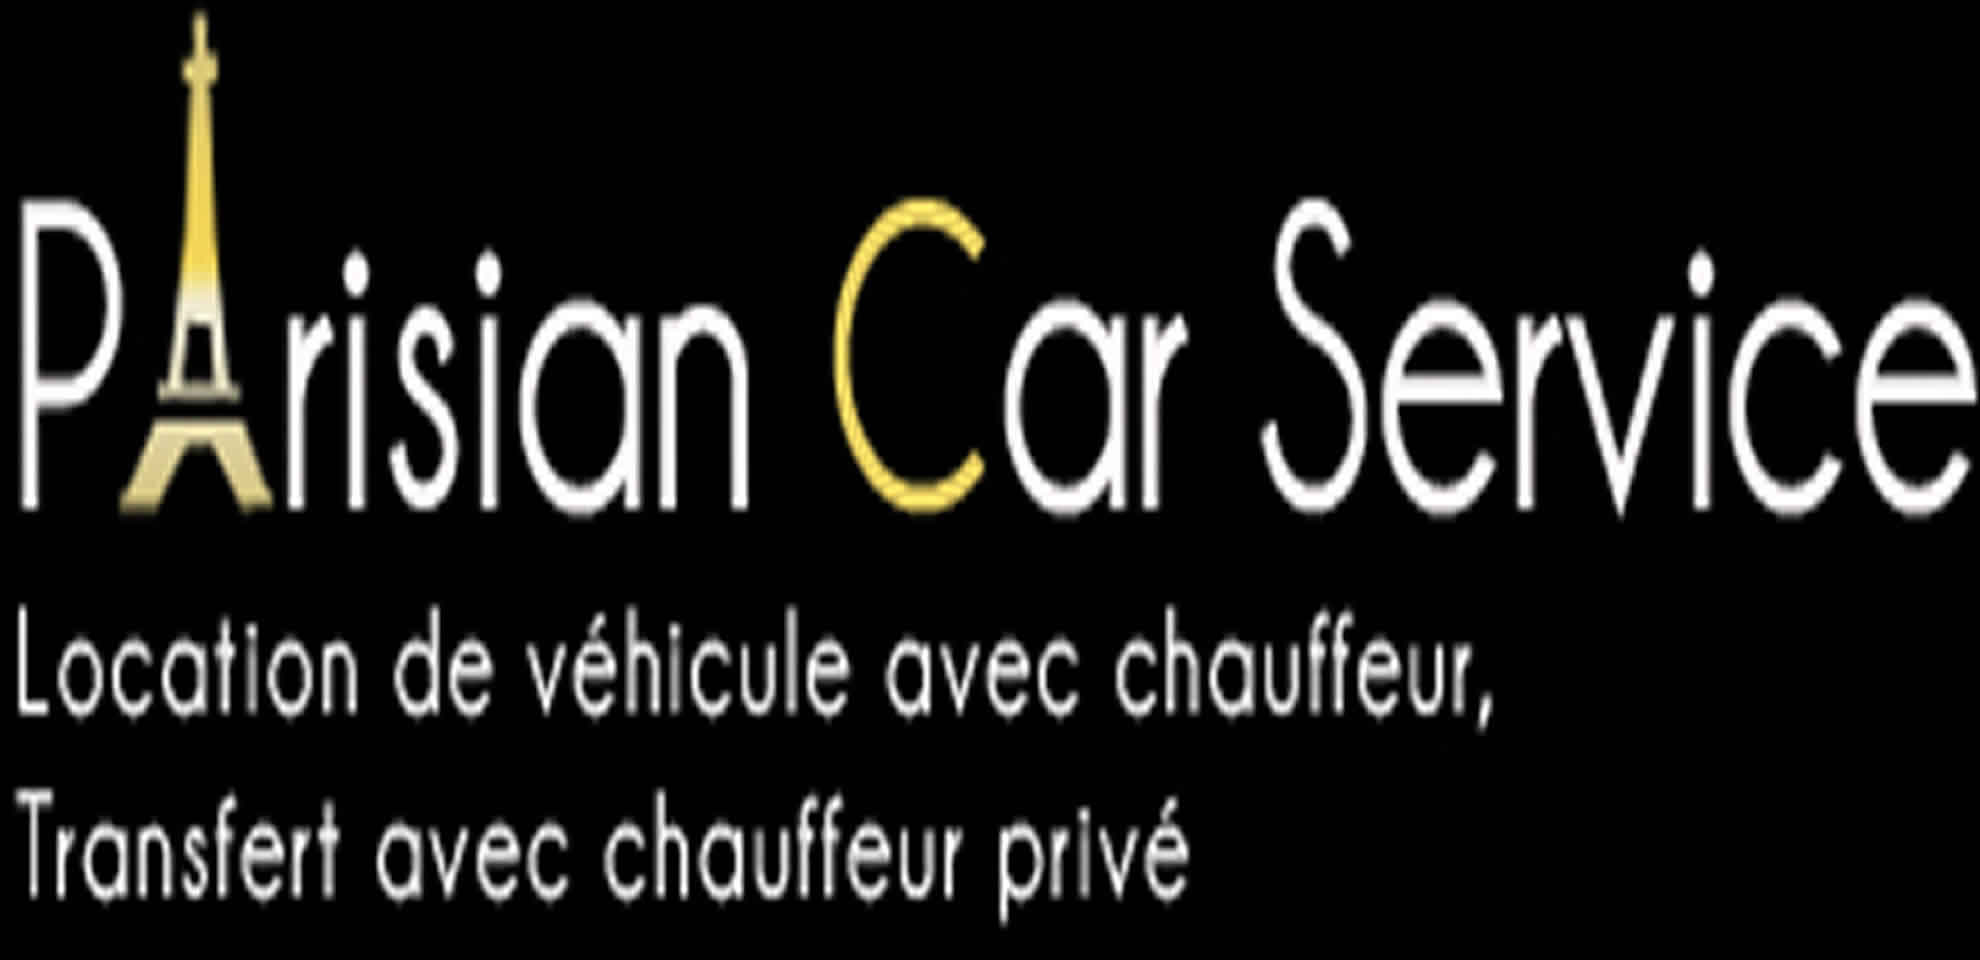 Parisian Car Service